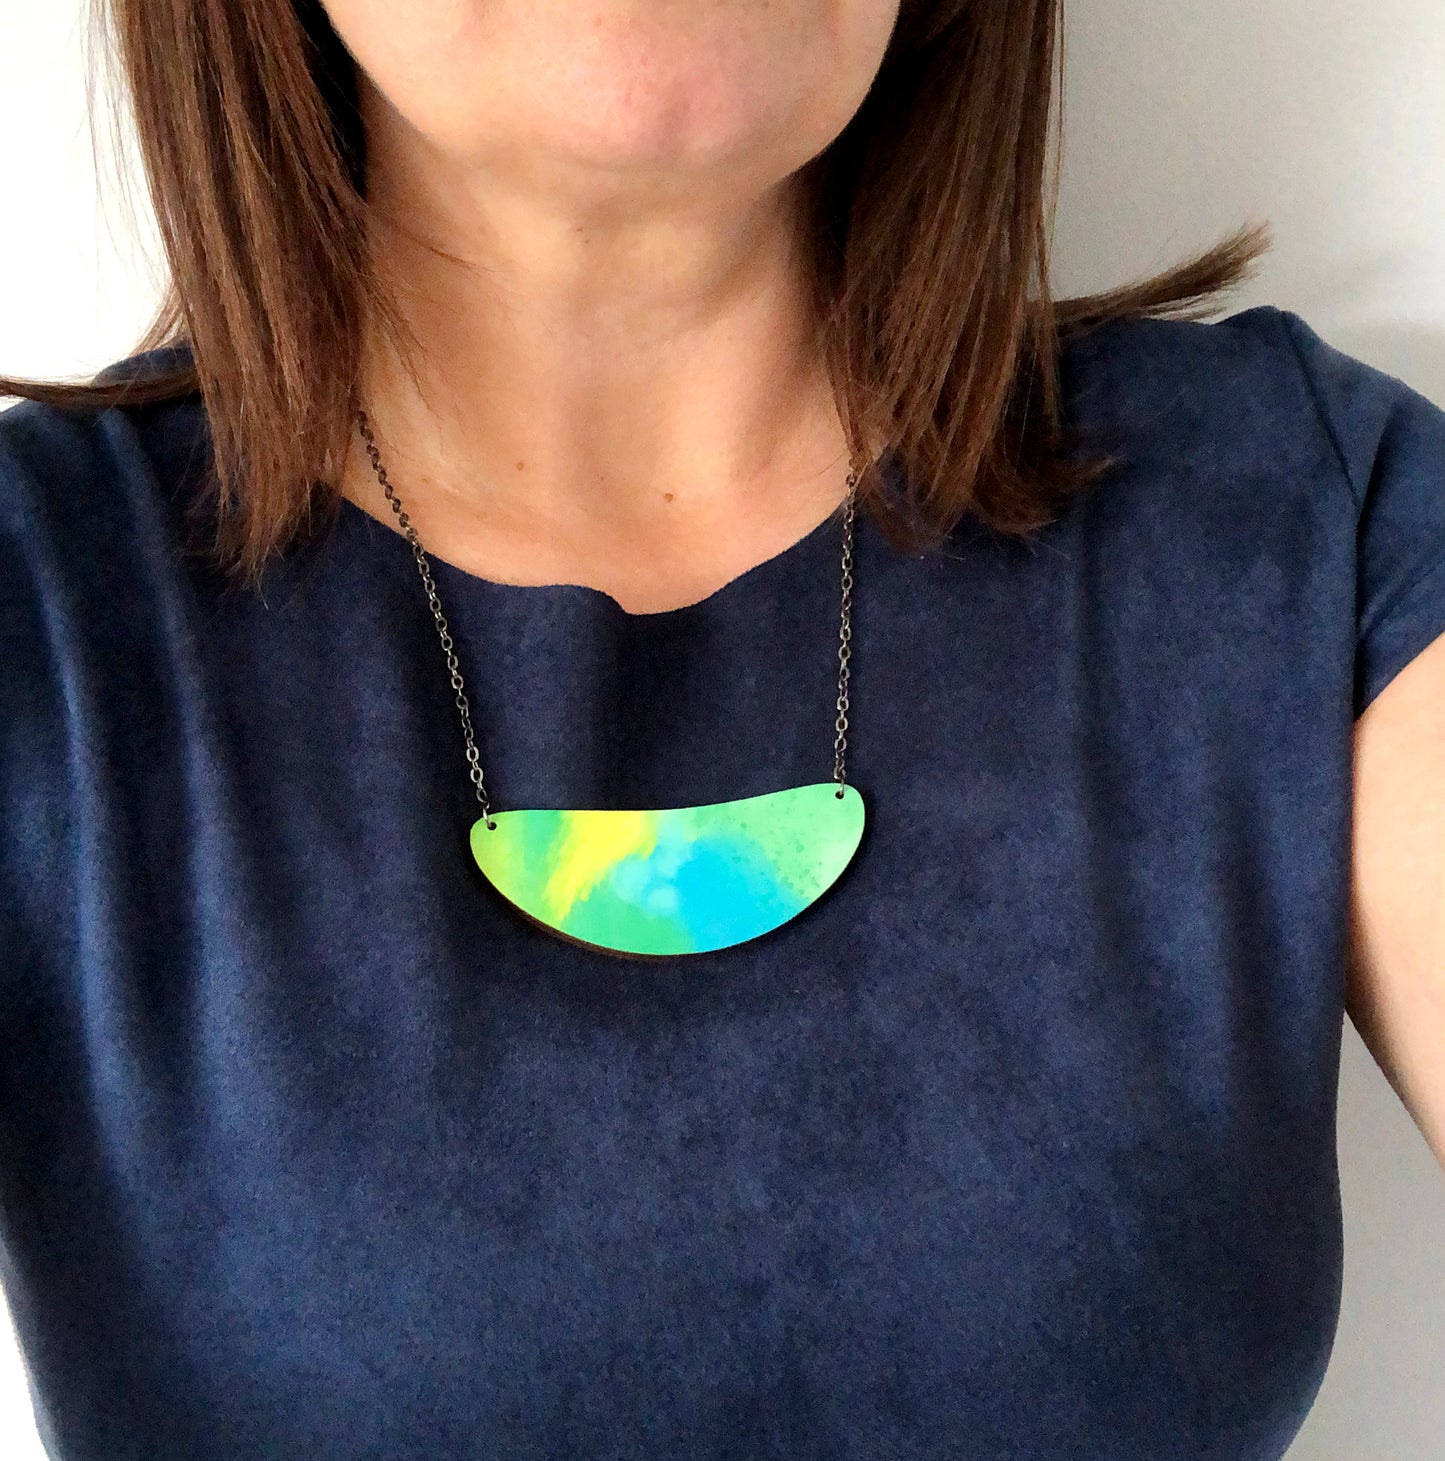 Green abstract design pendant bib necklace